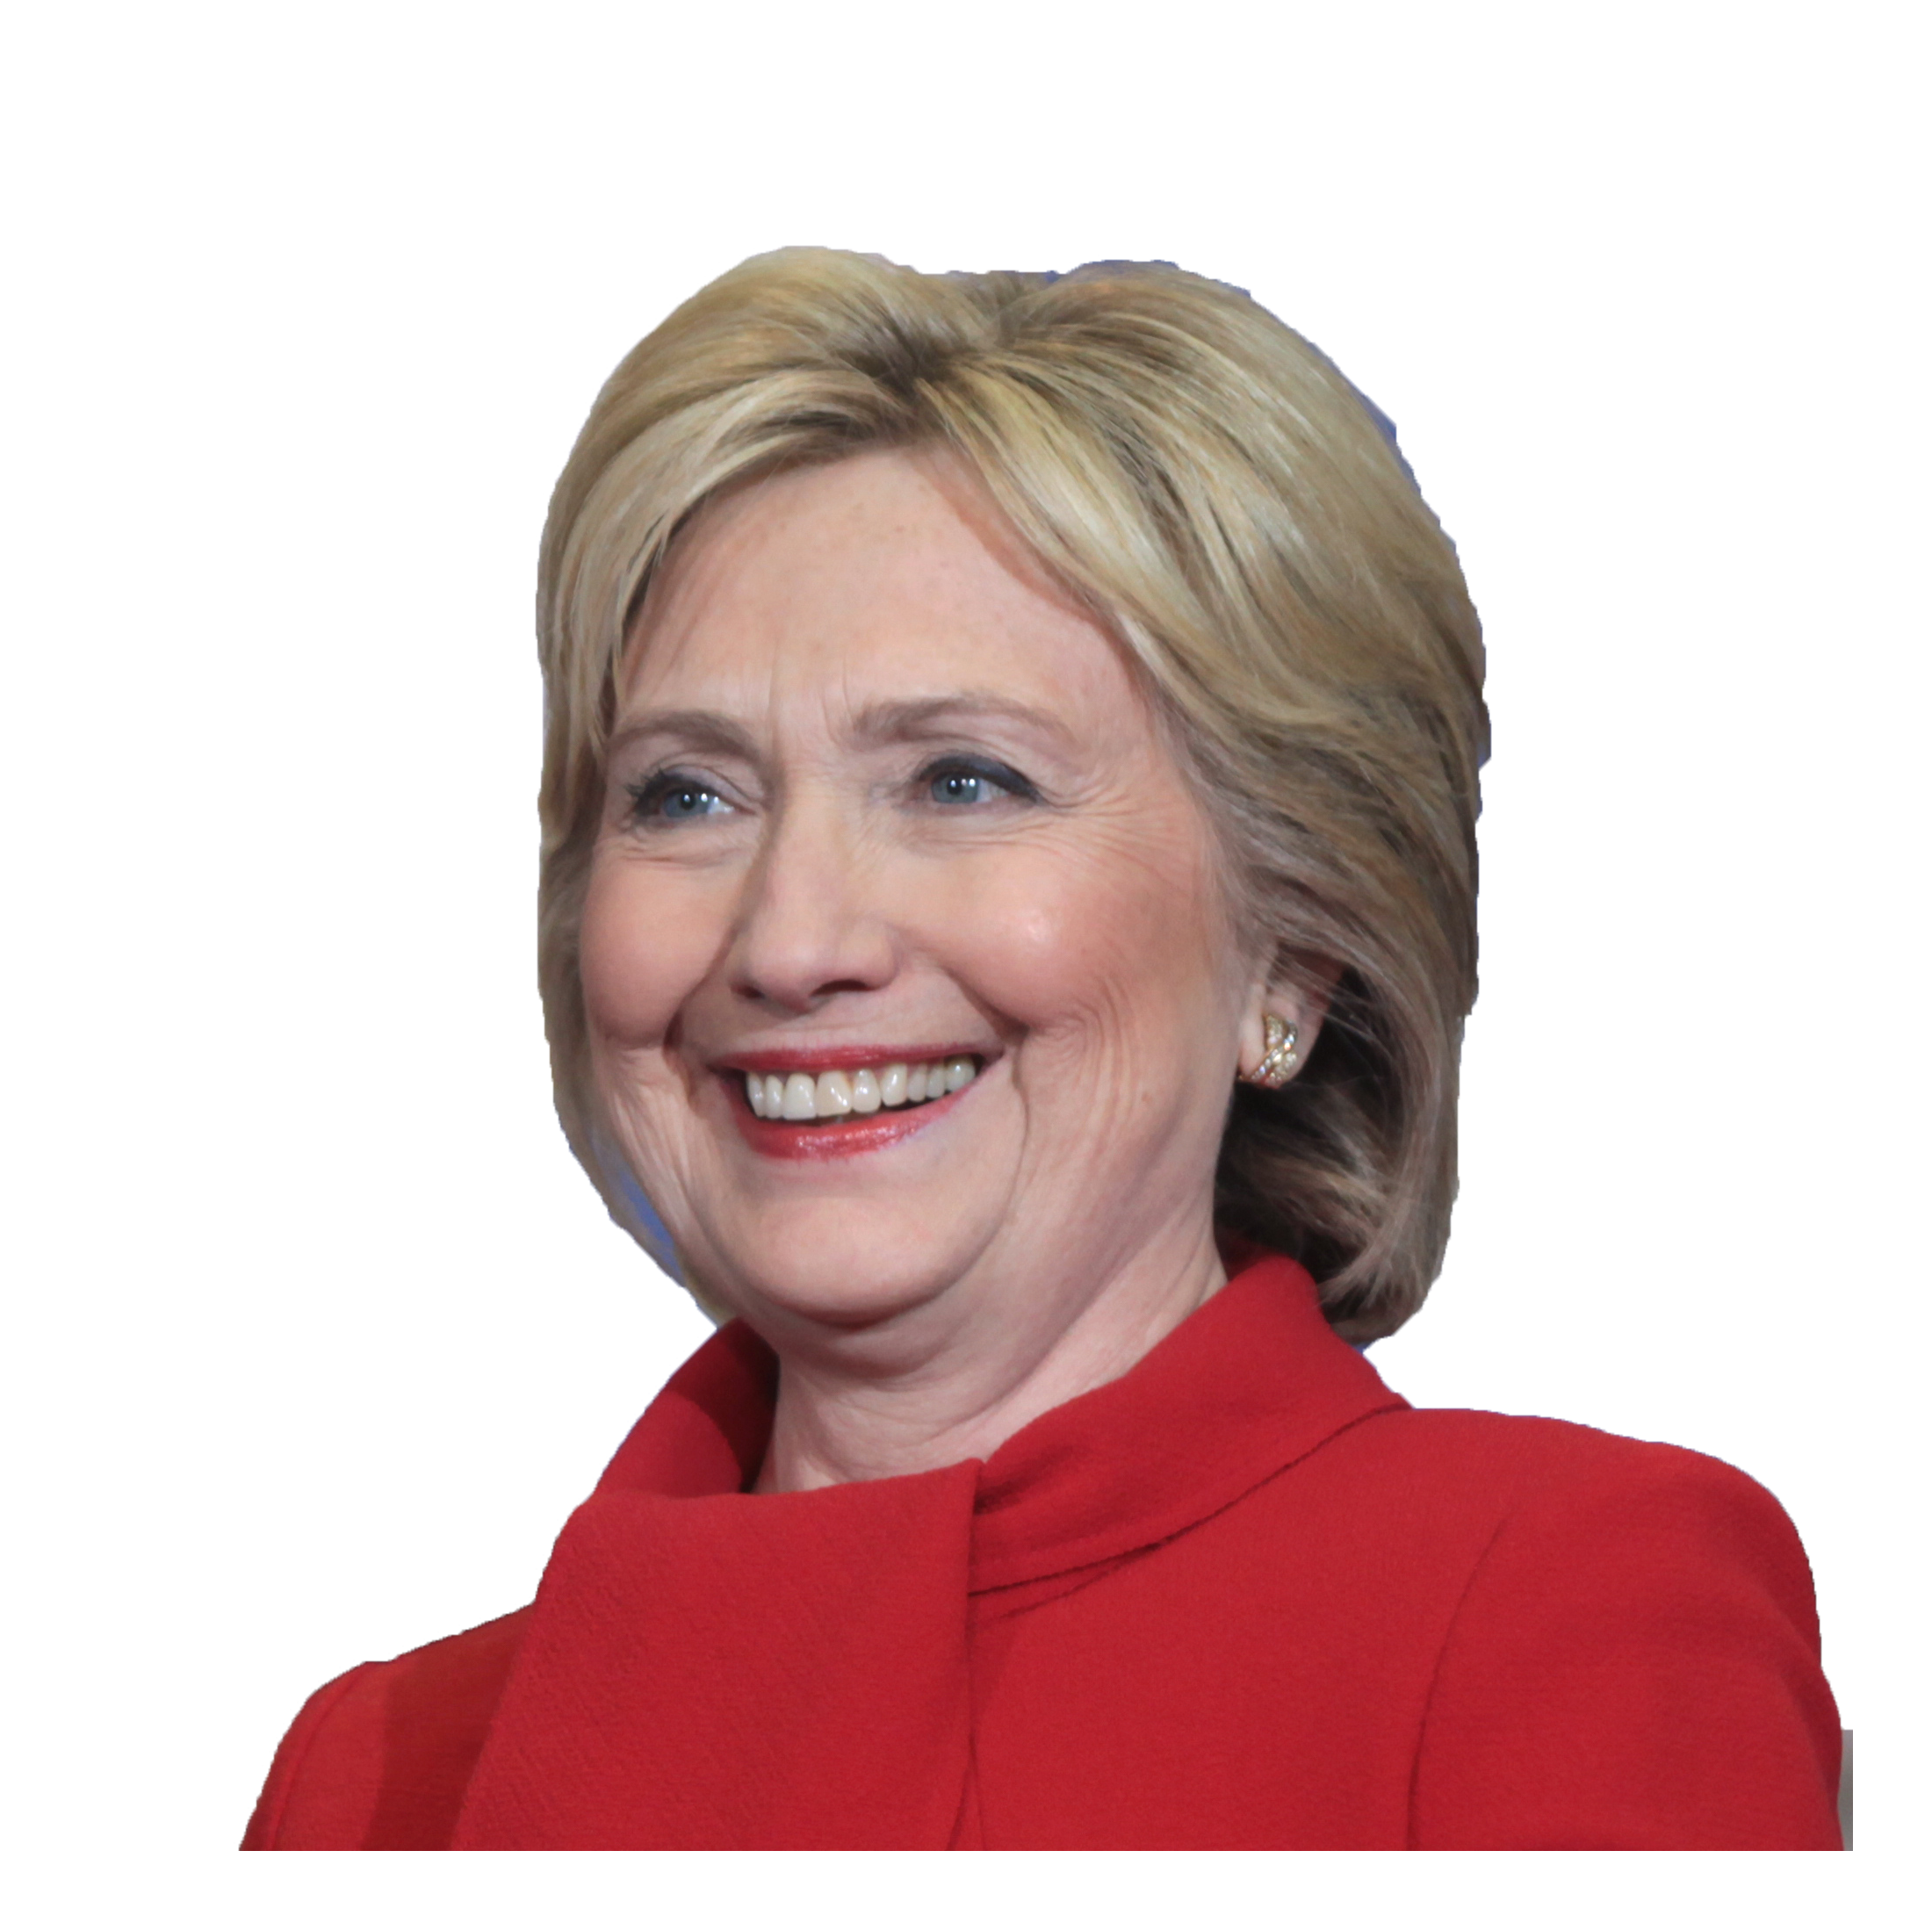 Hillary Clinton PNG Images pngteam.com